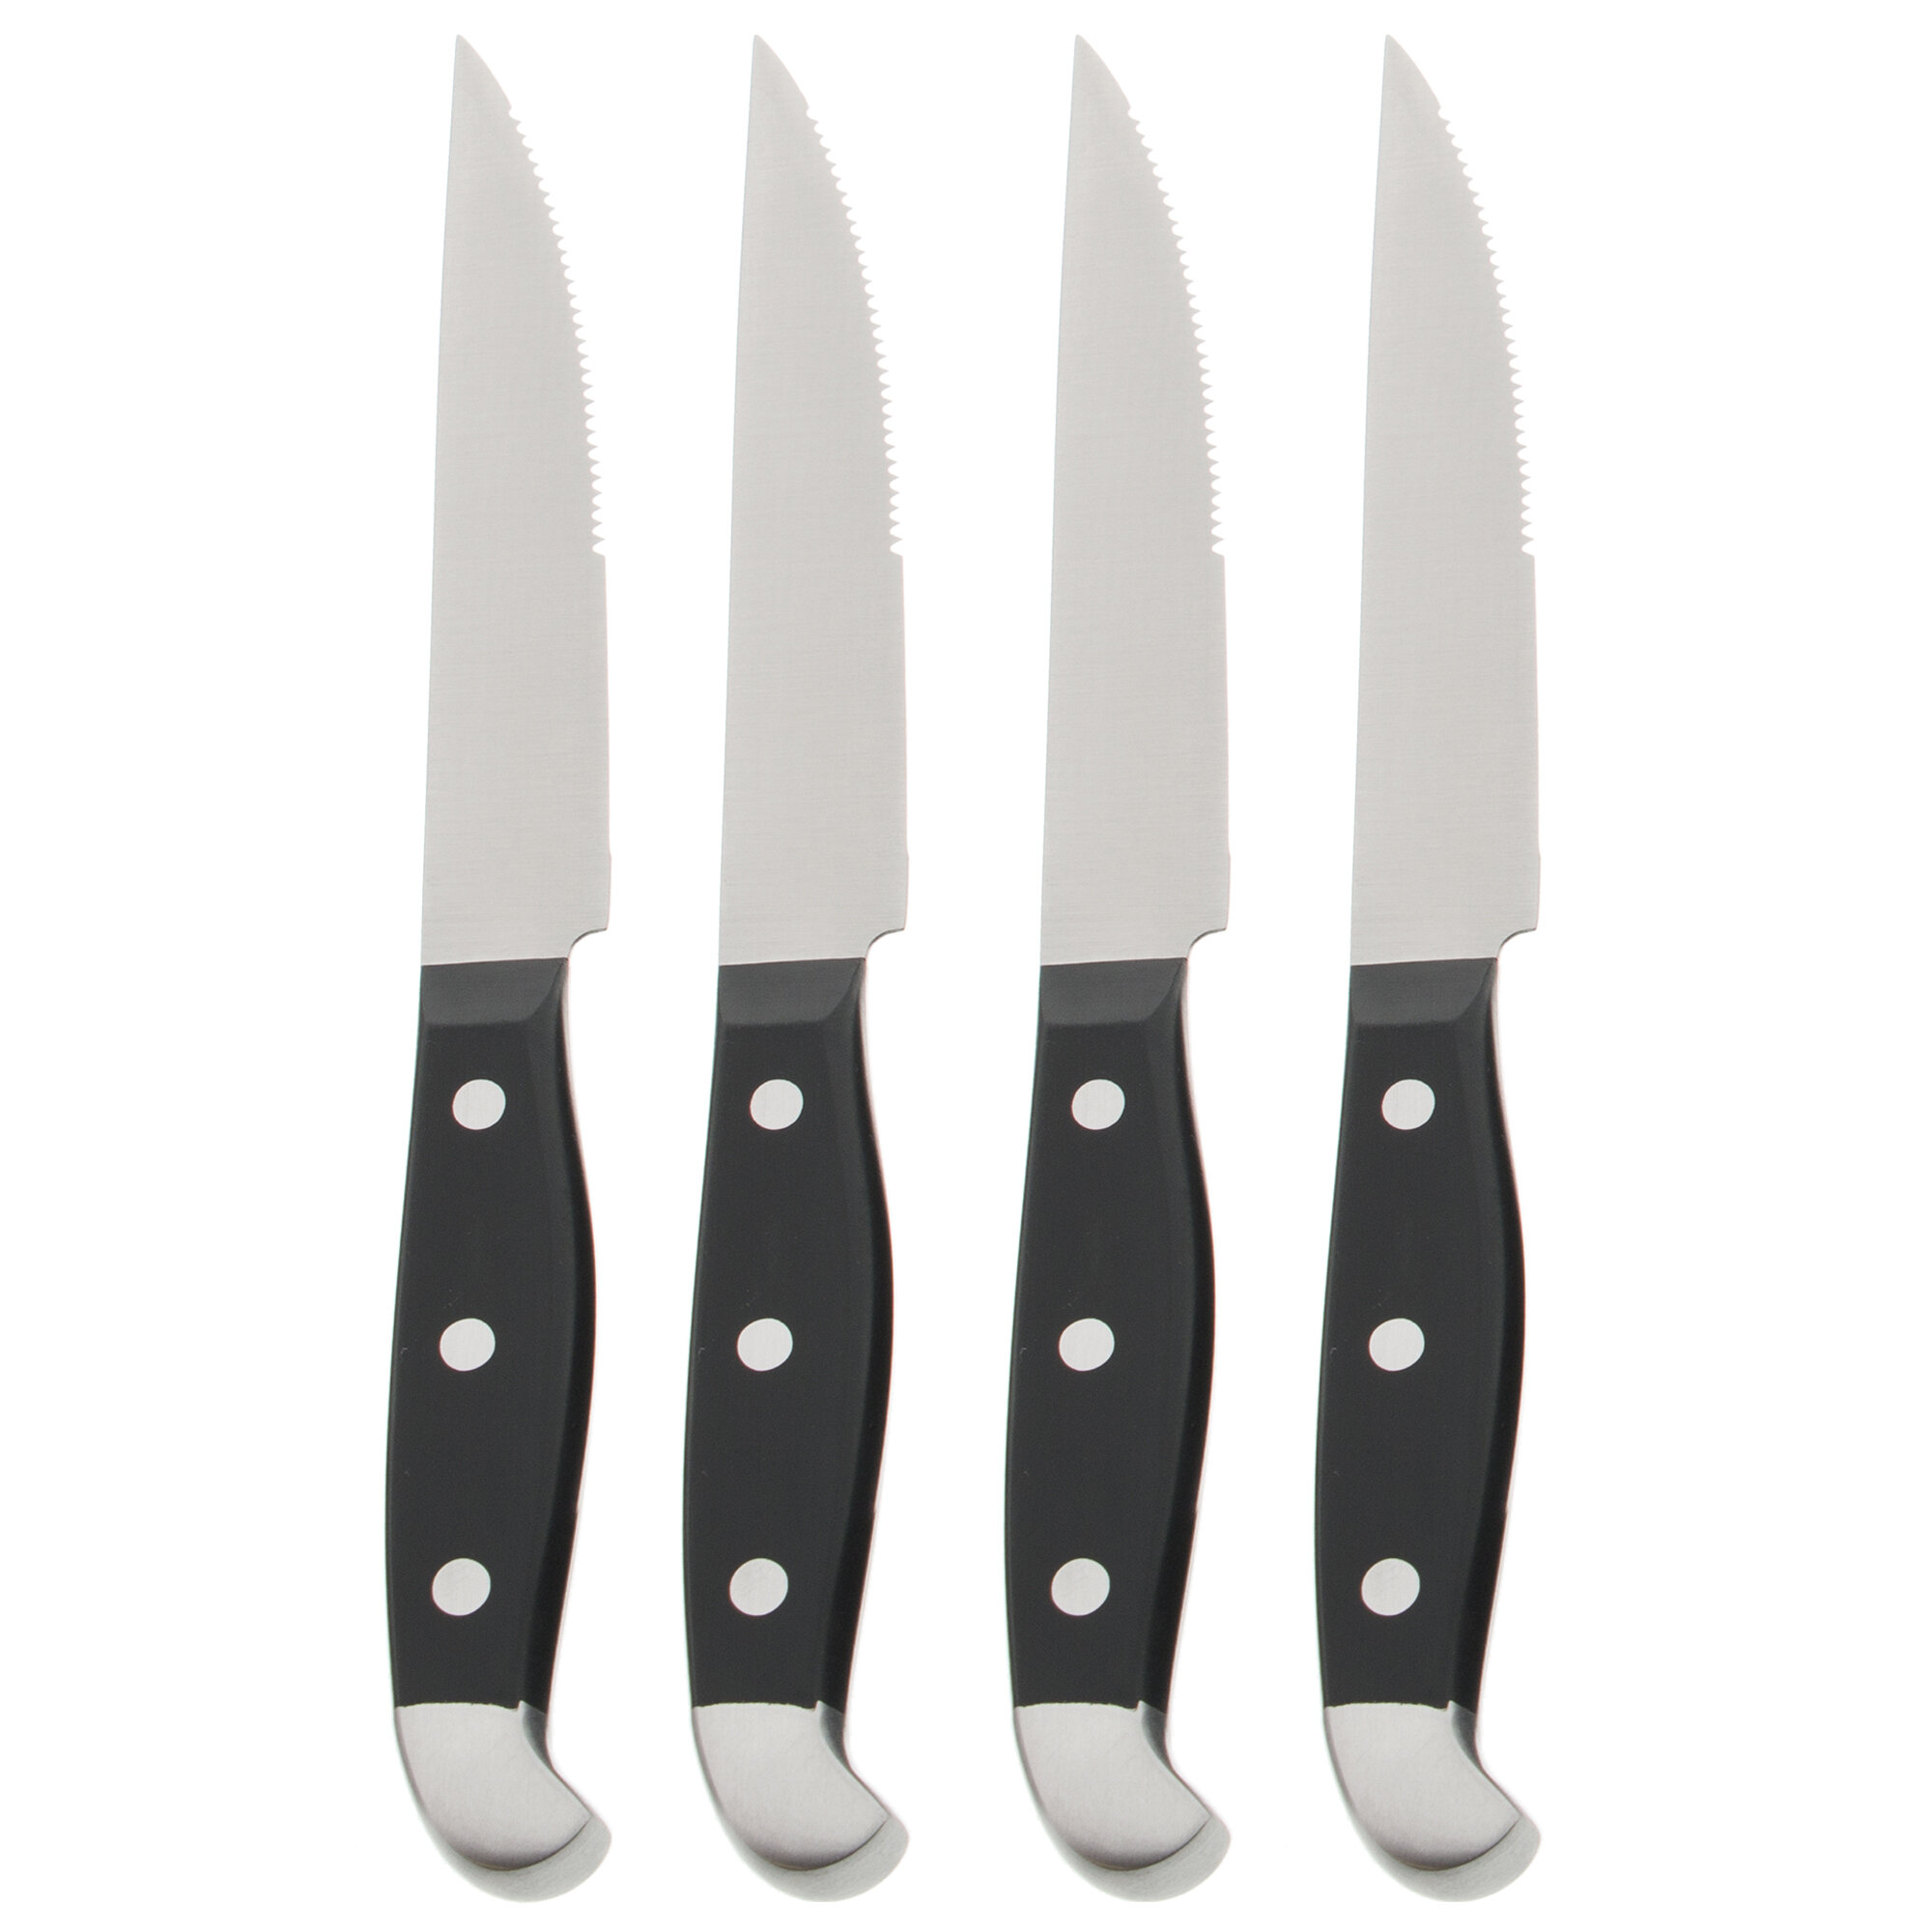 Henckels Forged Accent 4-pc, Steak Knife Set - Black